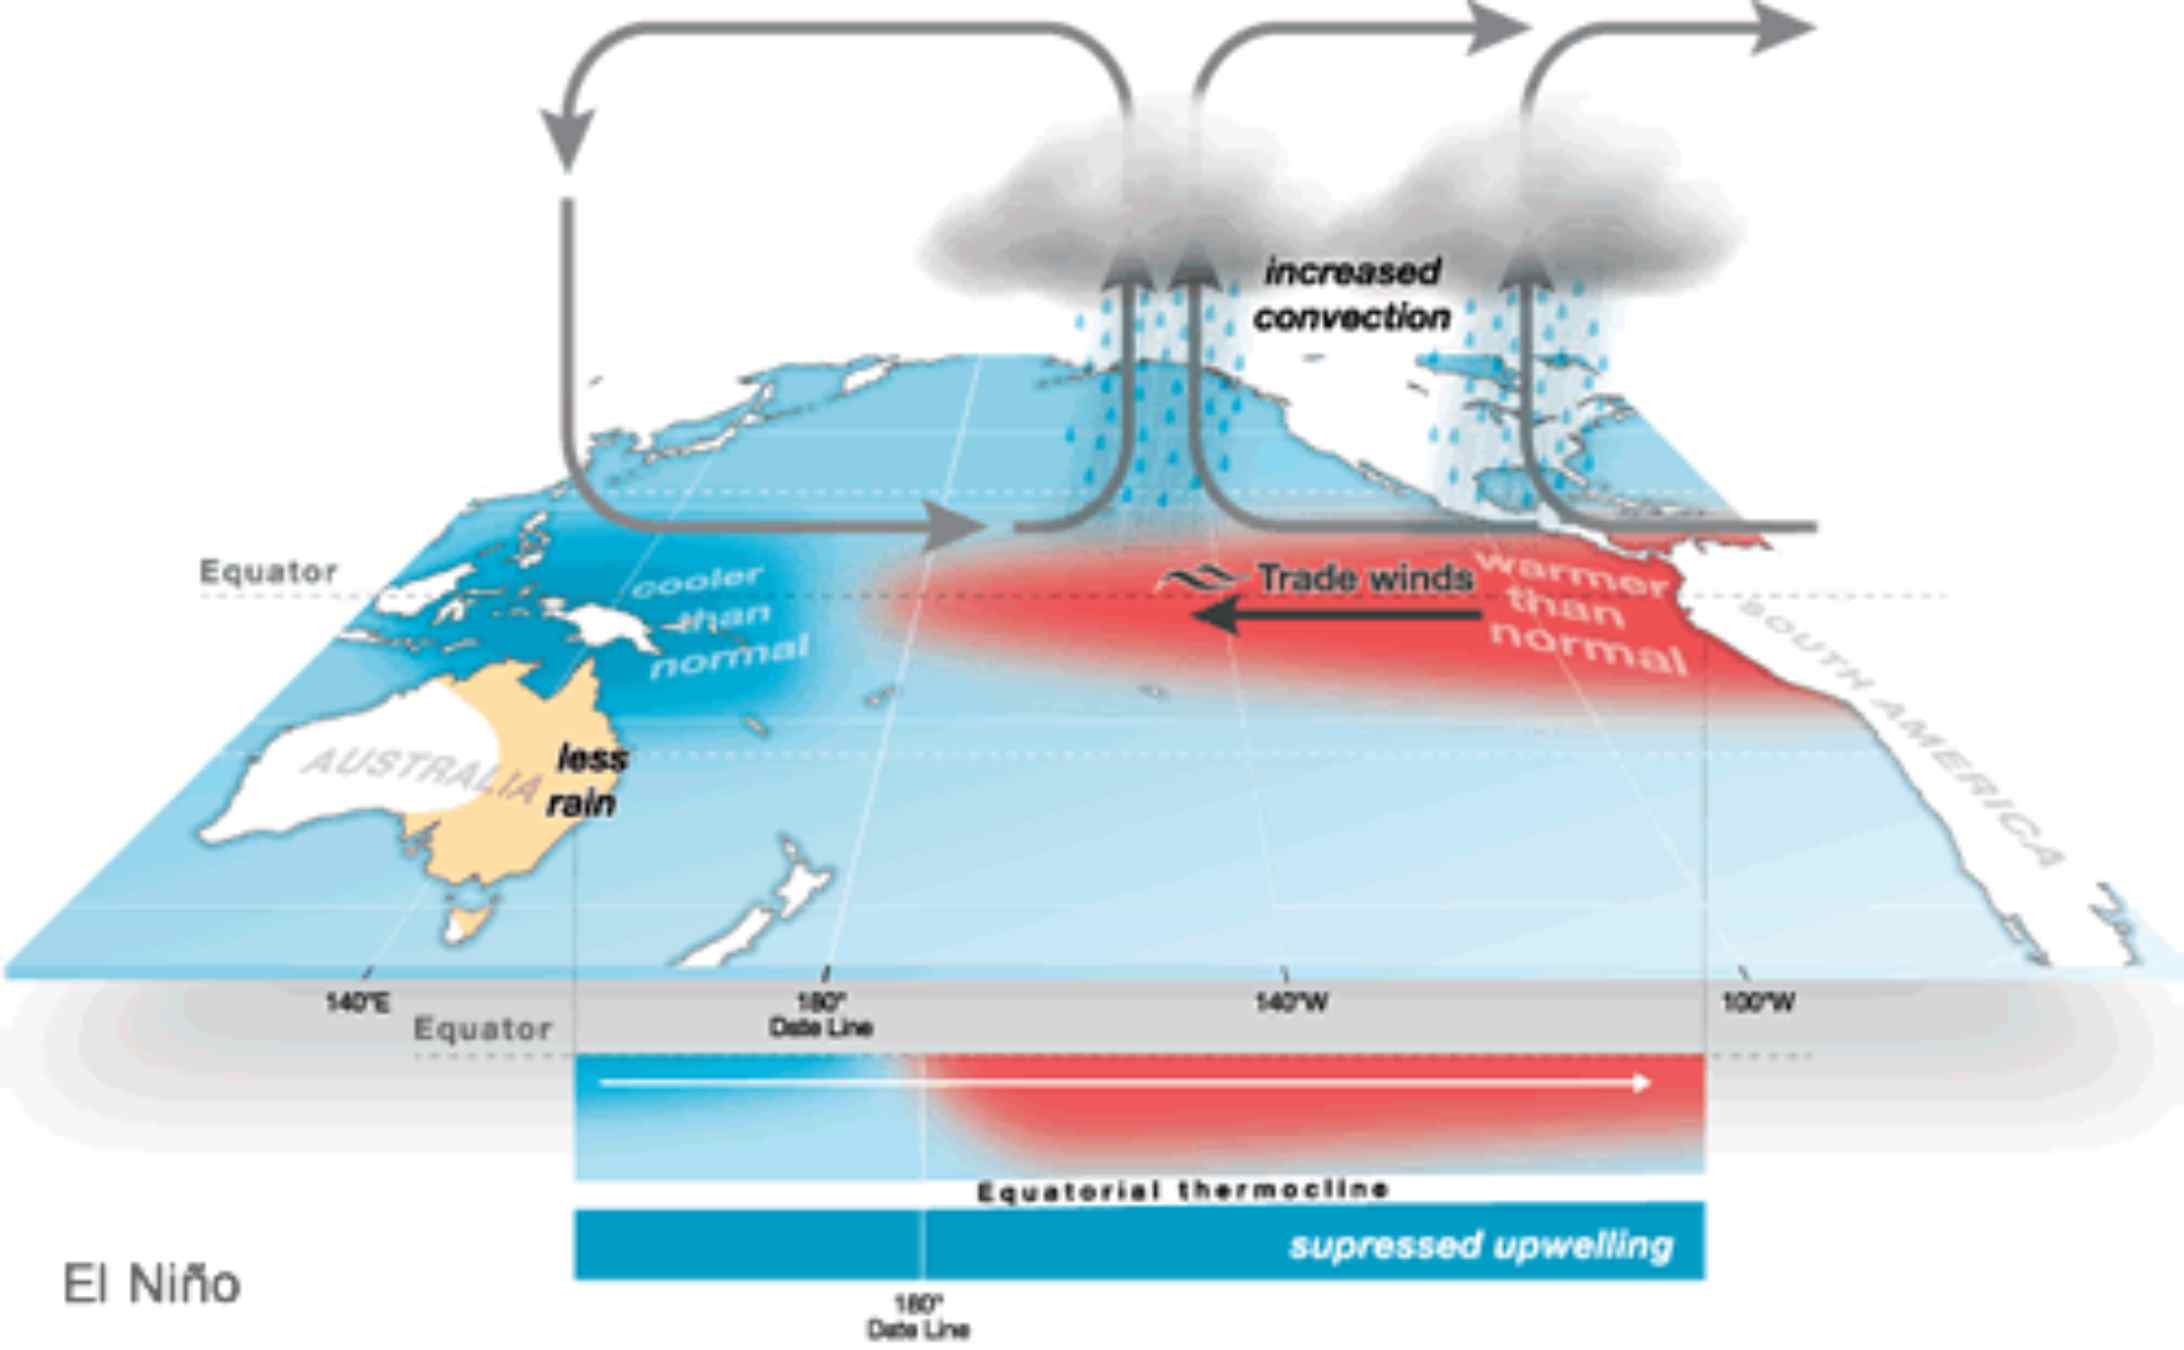 El Niño provoca sequeres i inundacions atípiques / Bureau of Meteorology - Australia Governement